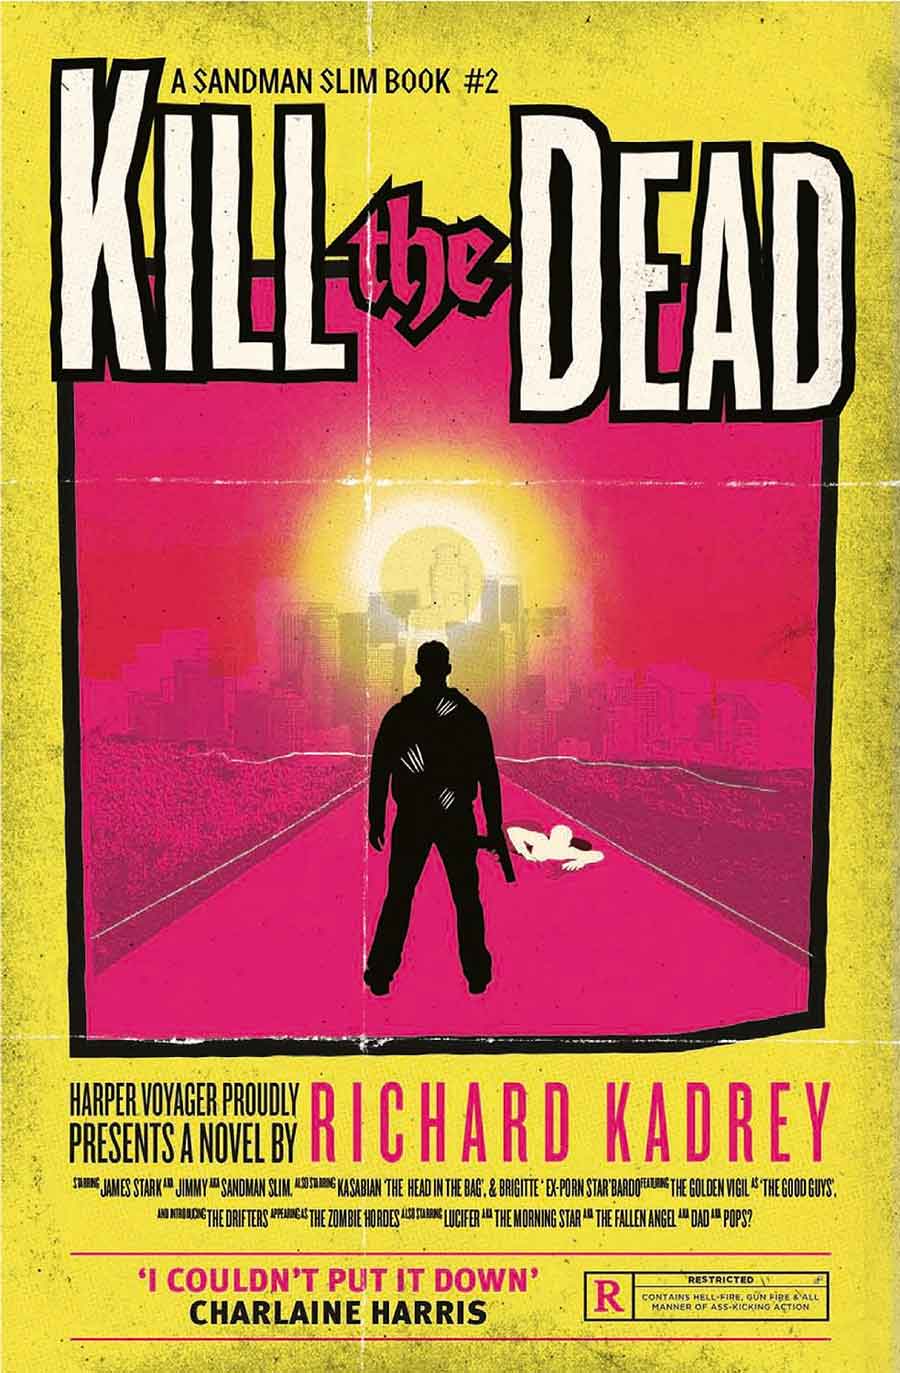 richard-kadrey-sandman-slim-kill-the-dead